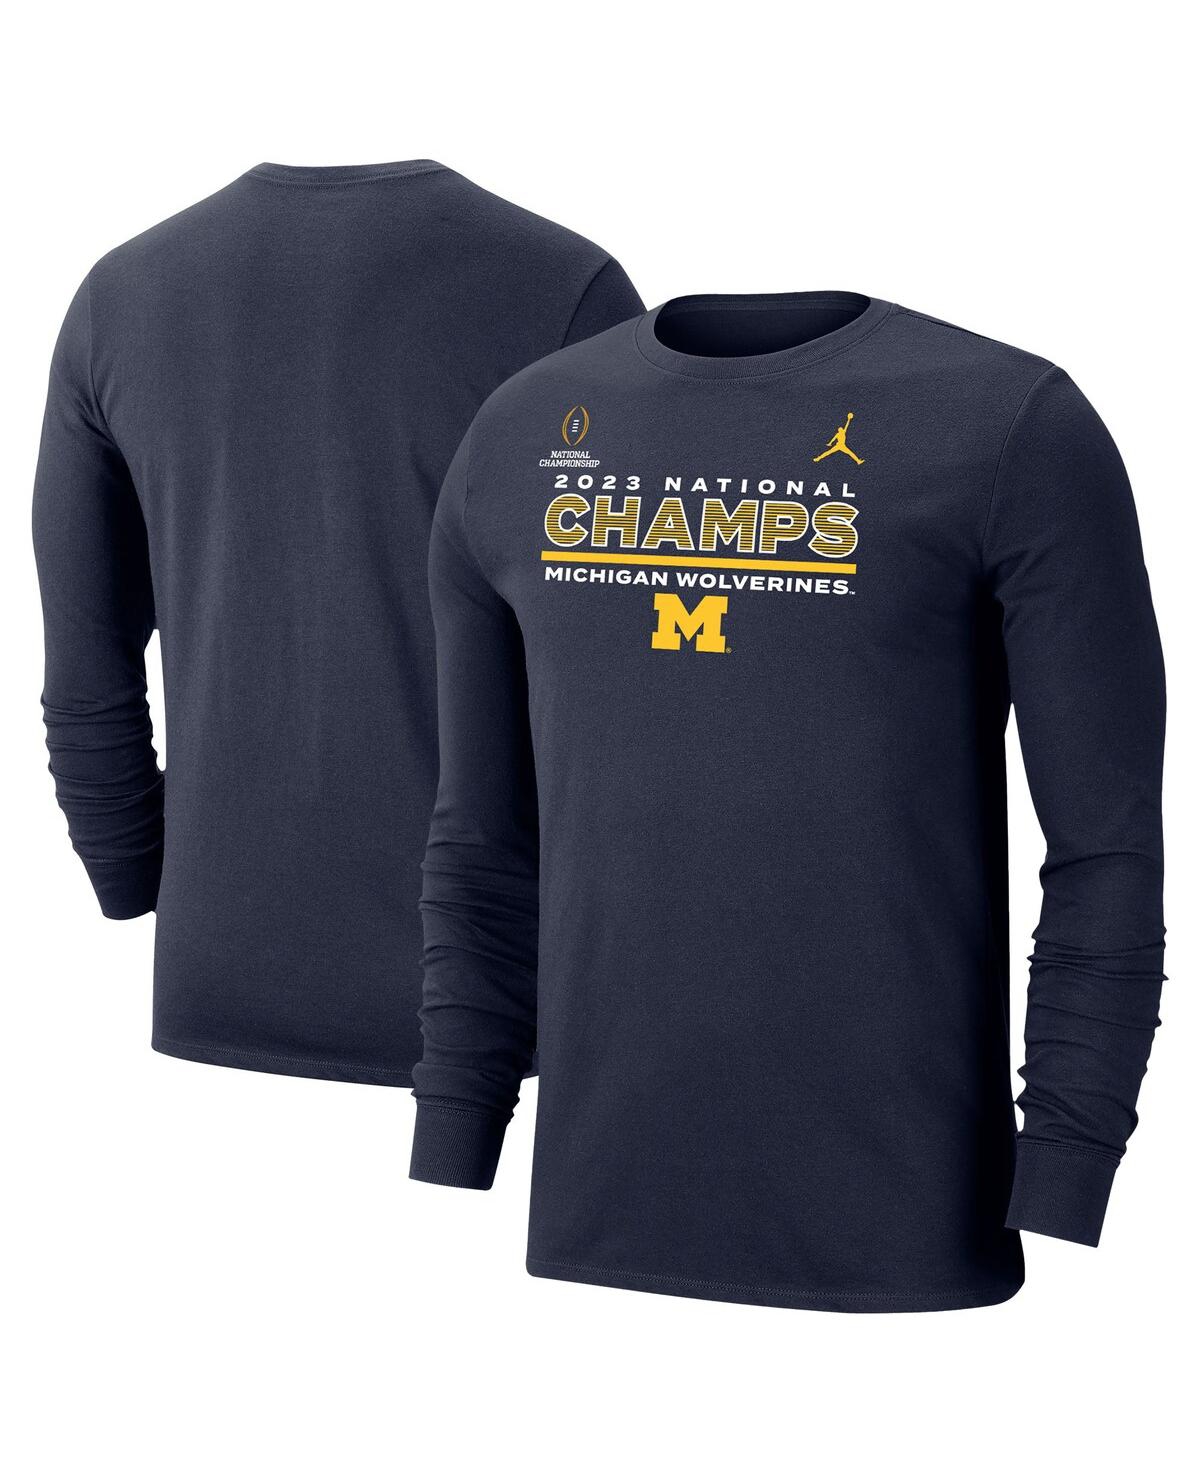 Men's Jordan Navy Michigan Wolverines College Football Playoff 2023 National Champions Performance Long Sleeve T-shirt - Navy